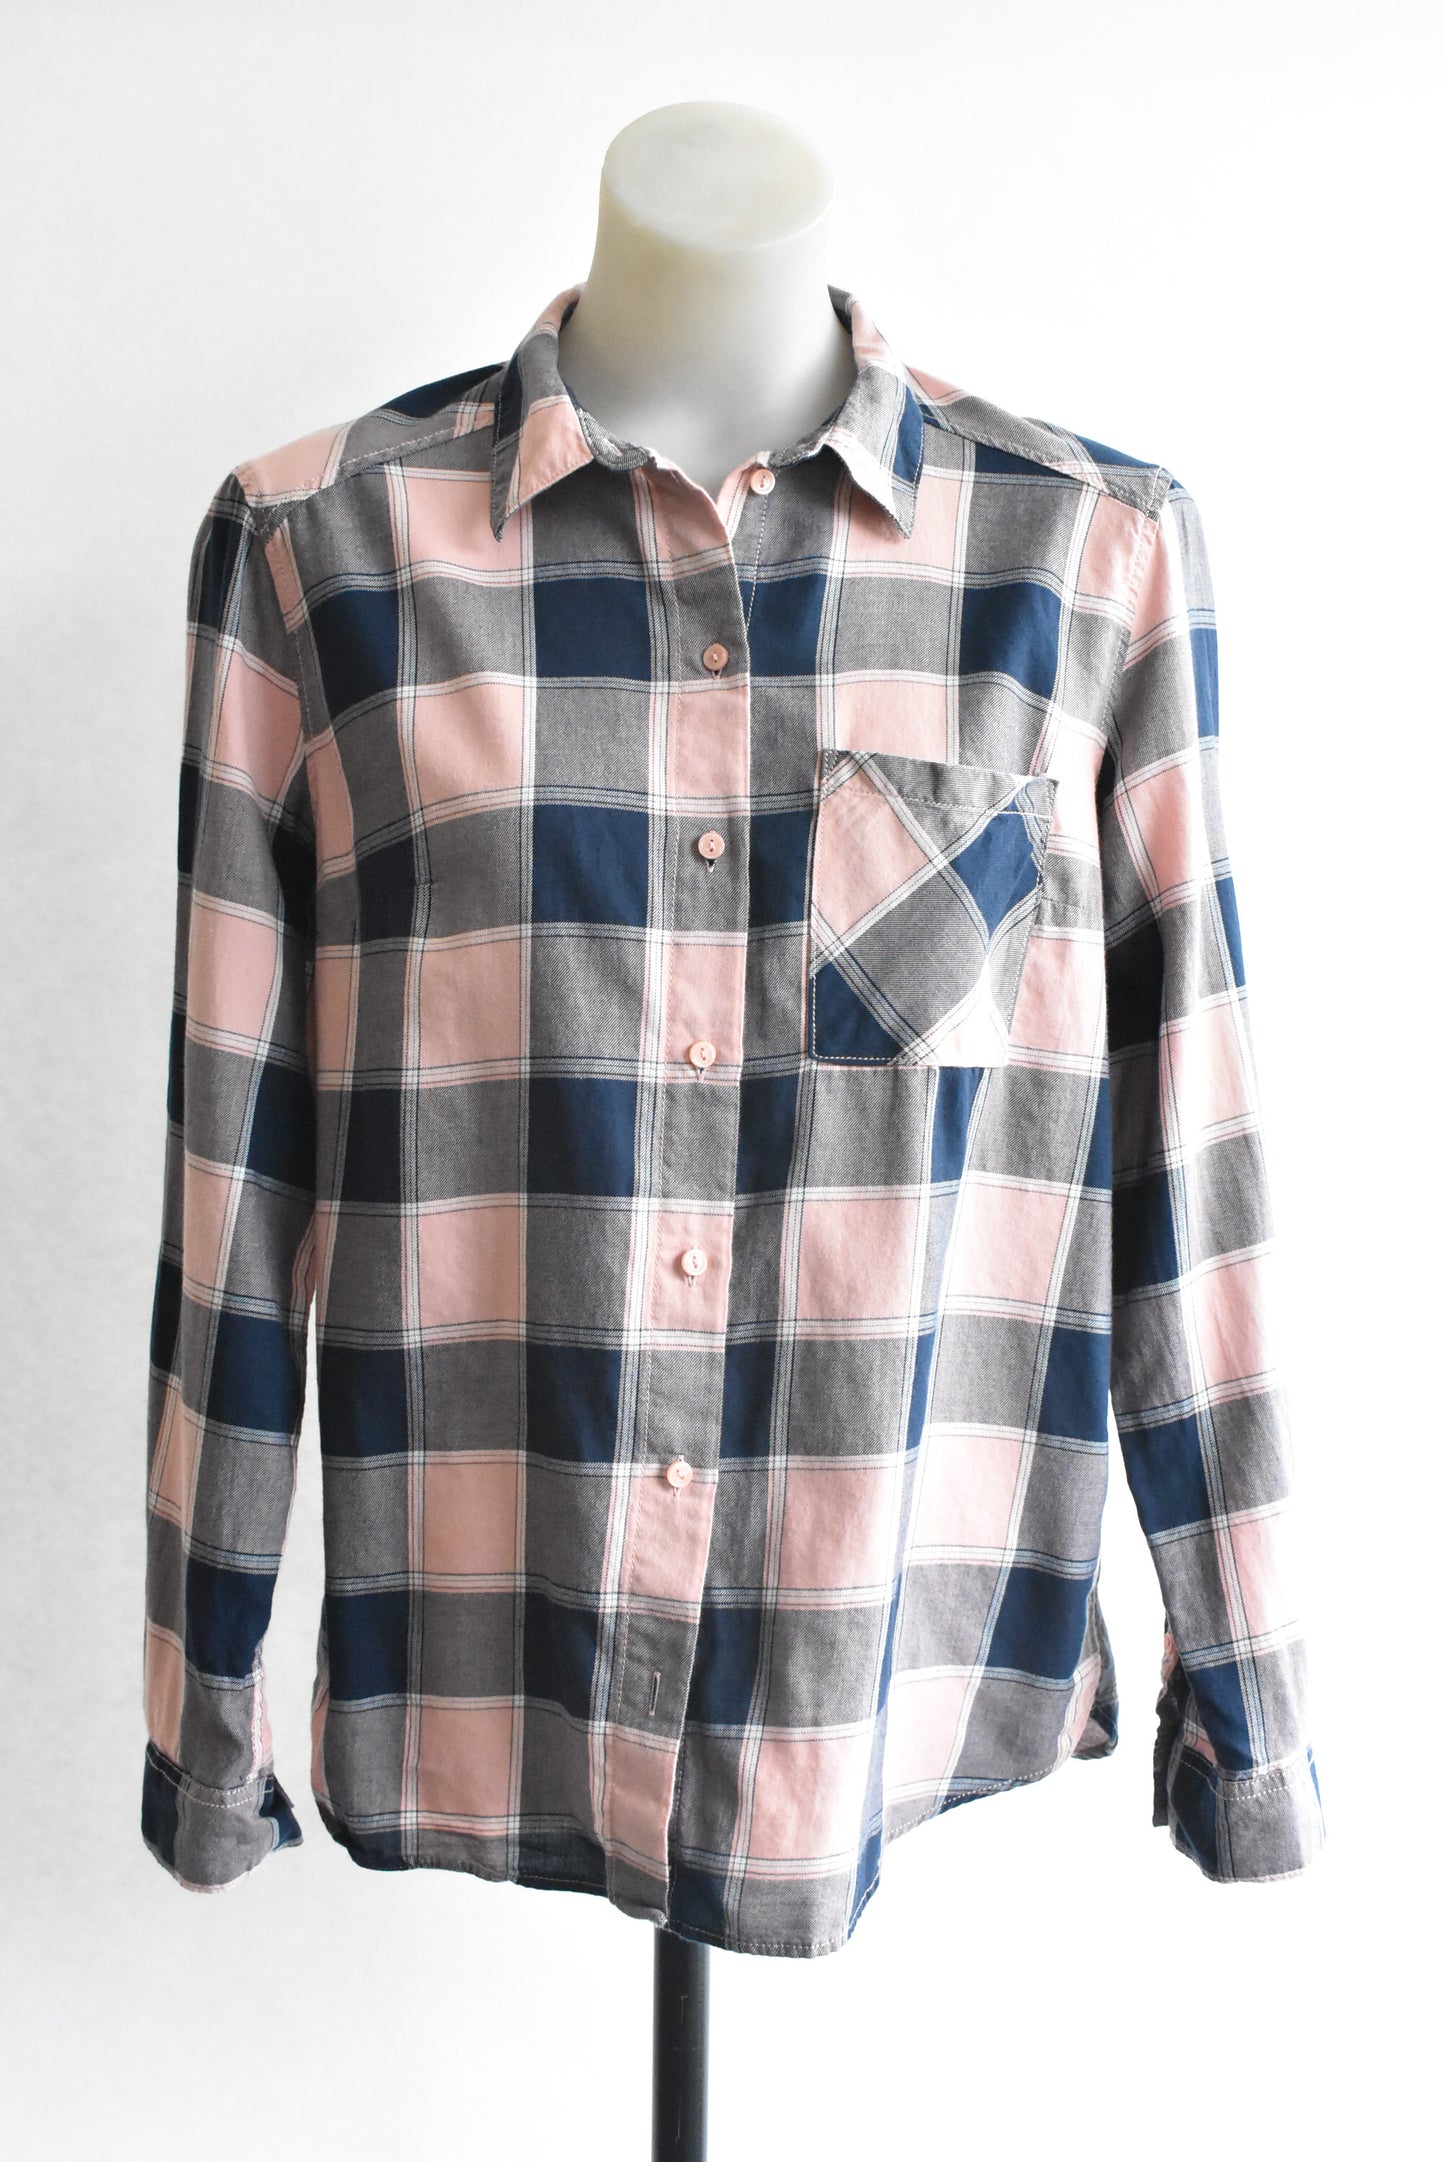 H&M navy & blush pink 100% cotton plaid shirt, size S